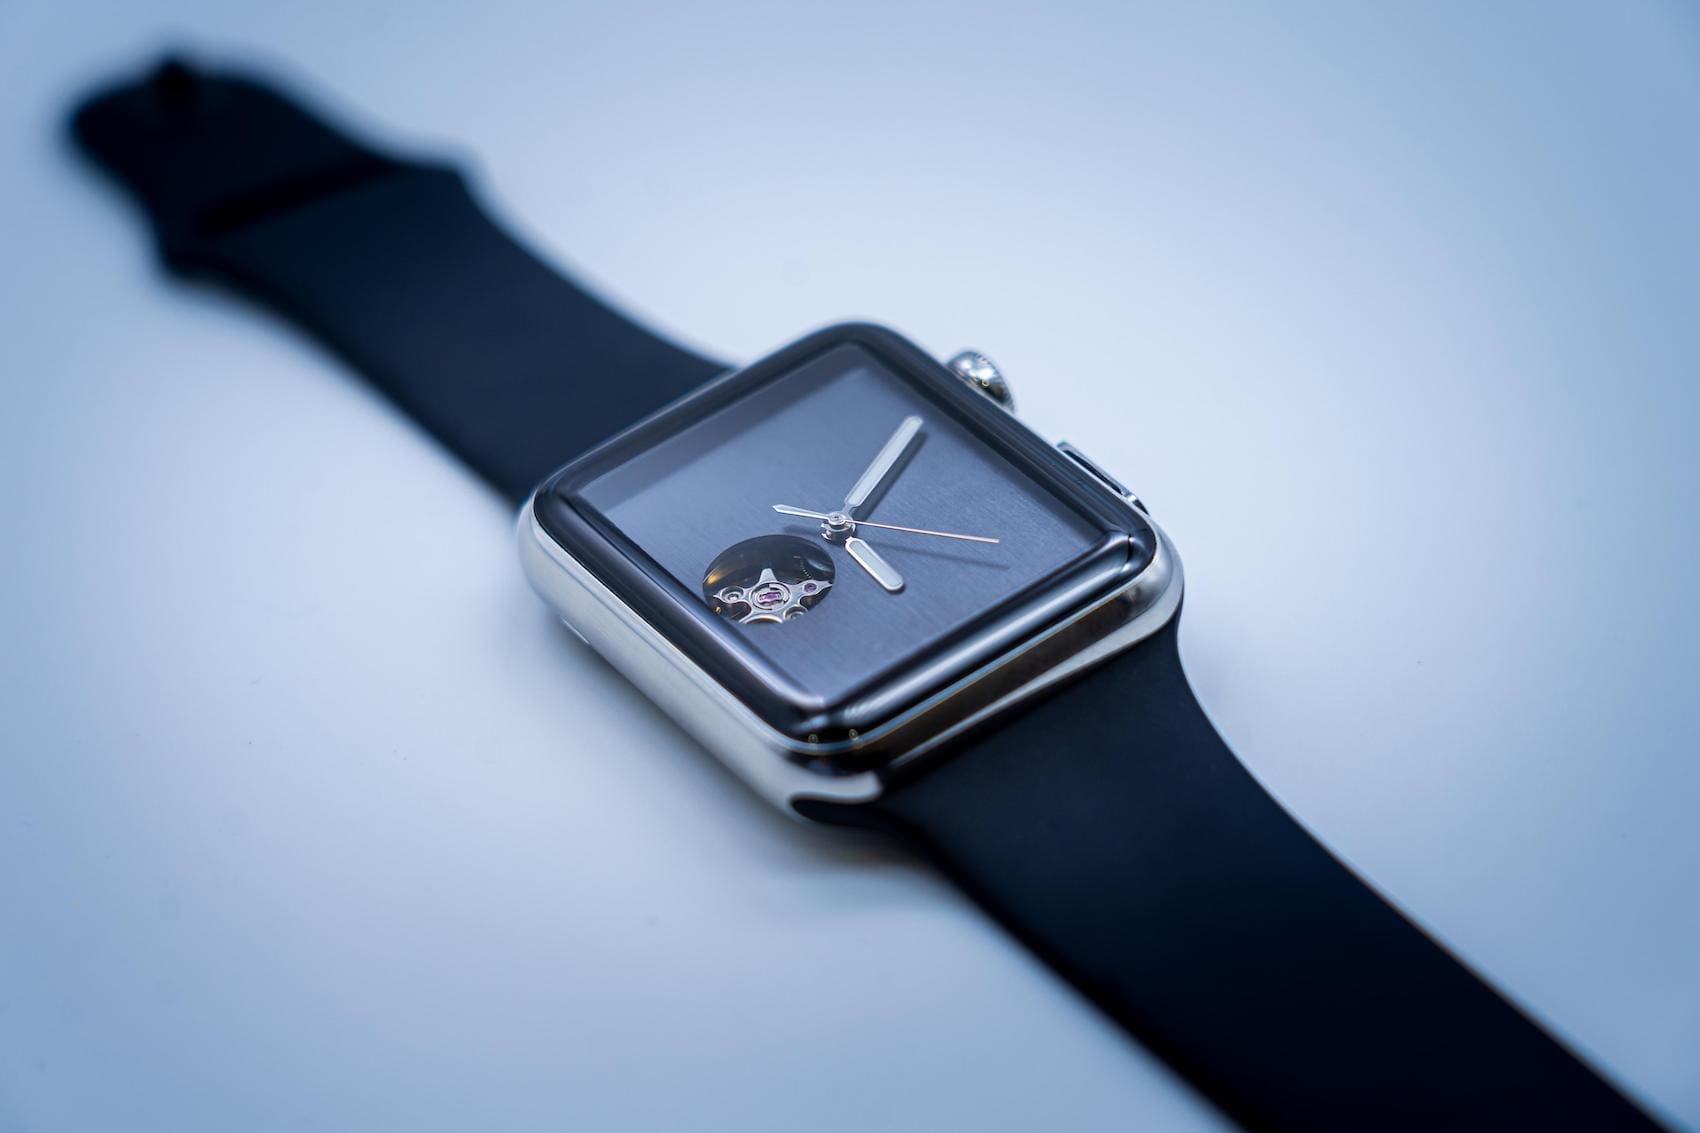 Days of future past: How a hacker resurrected a first-gen Apple Watch into a mechanical timepiece